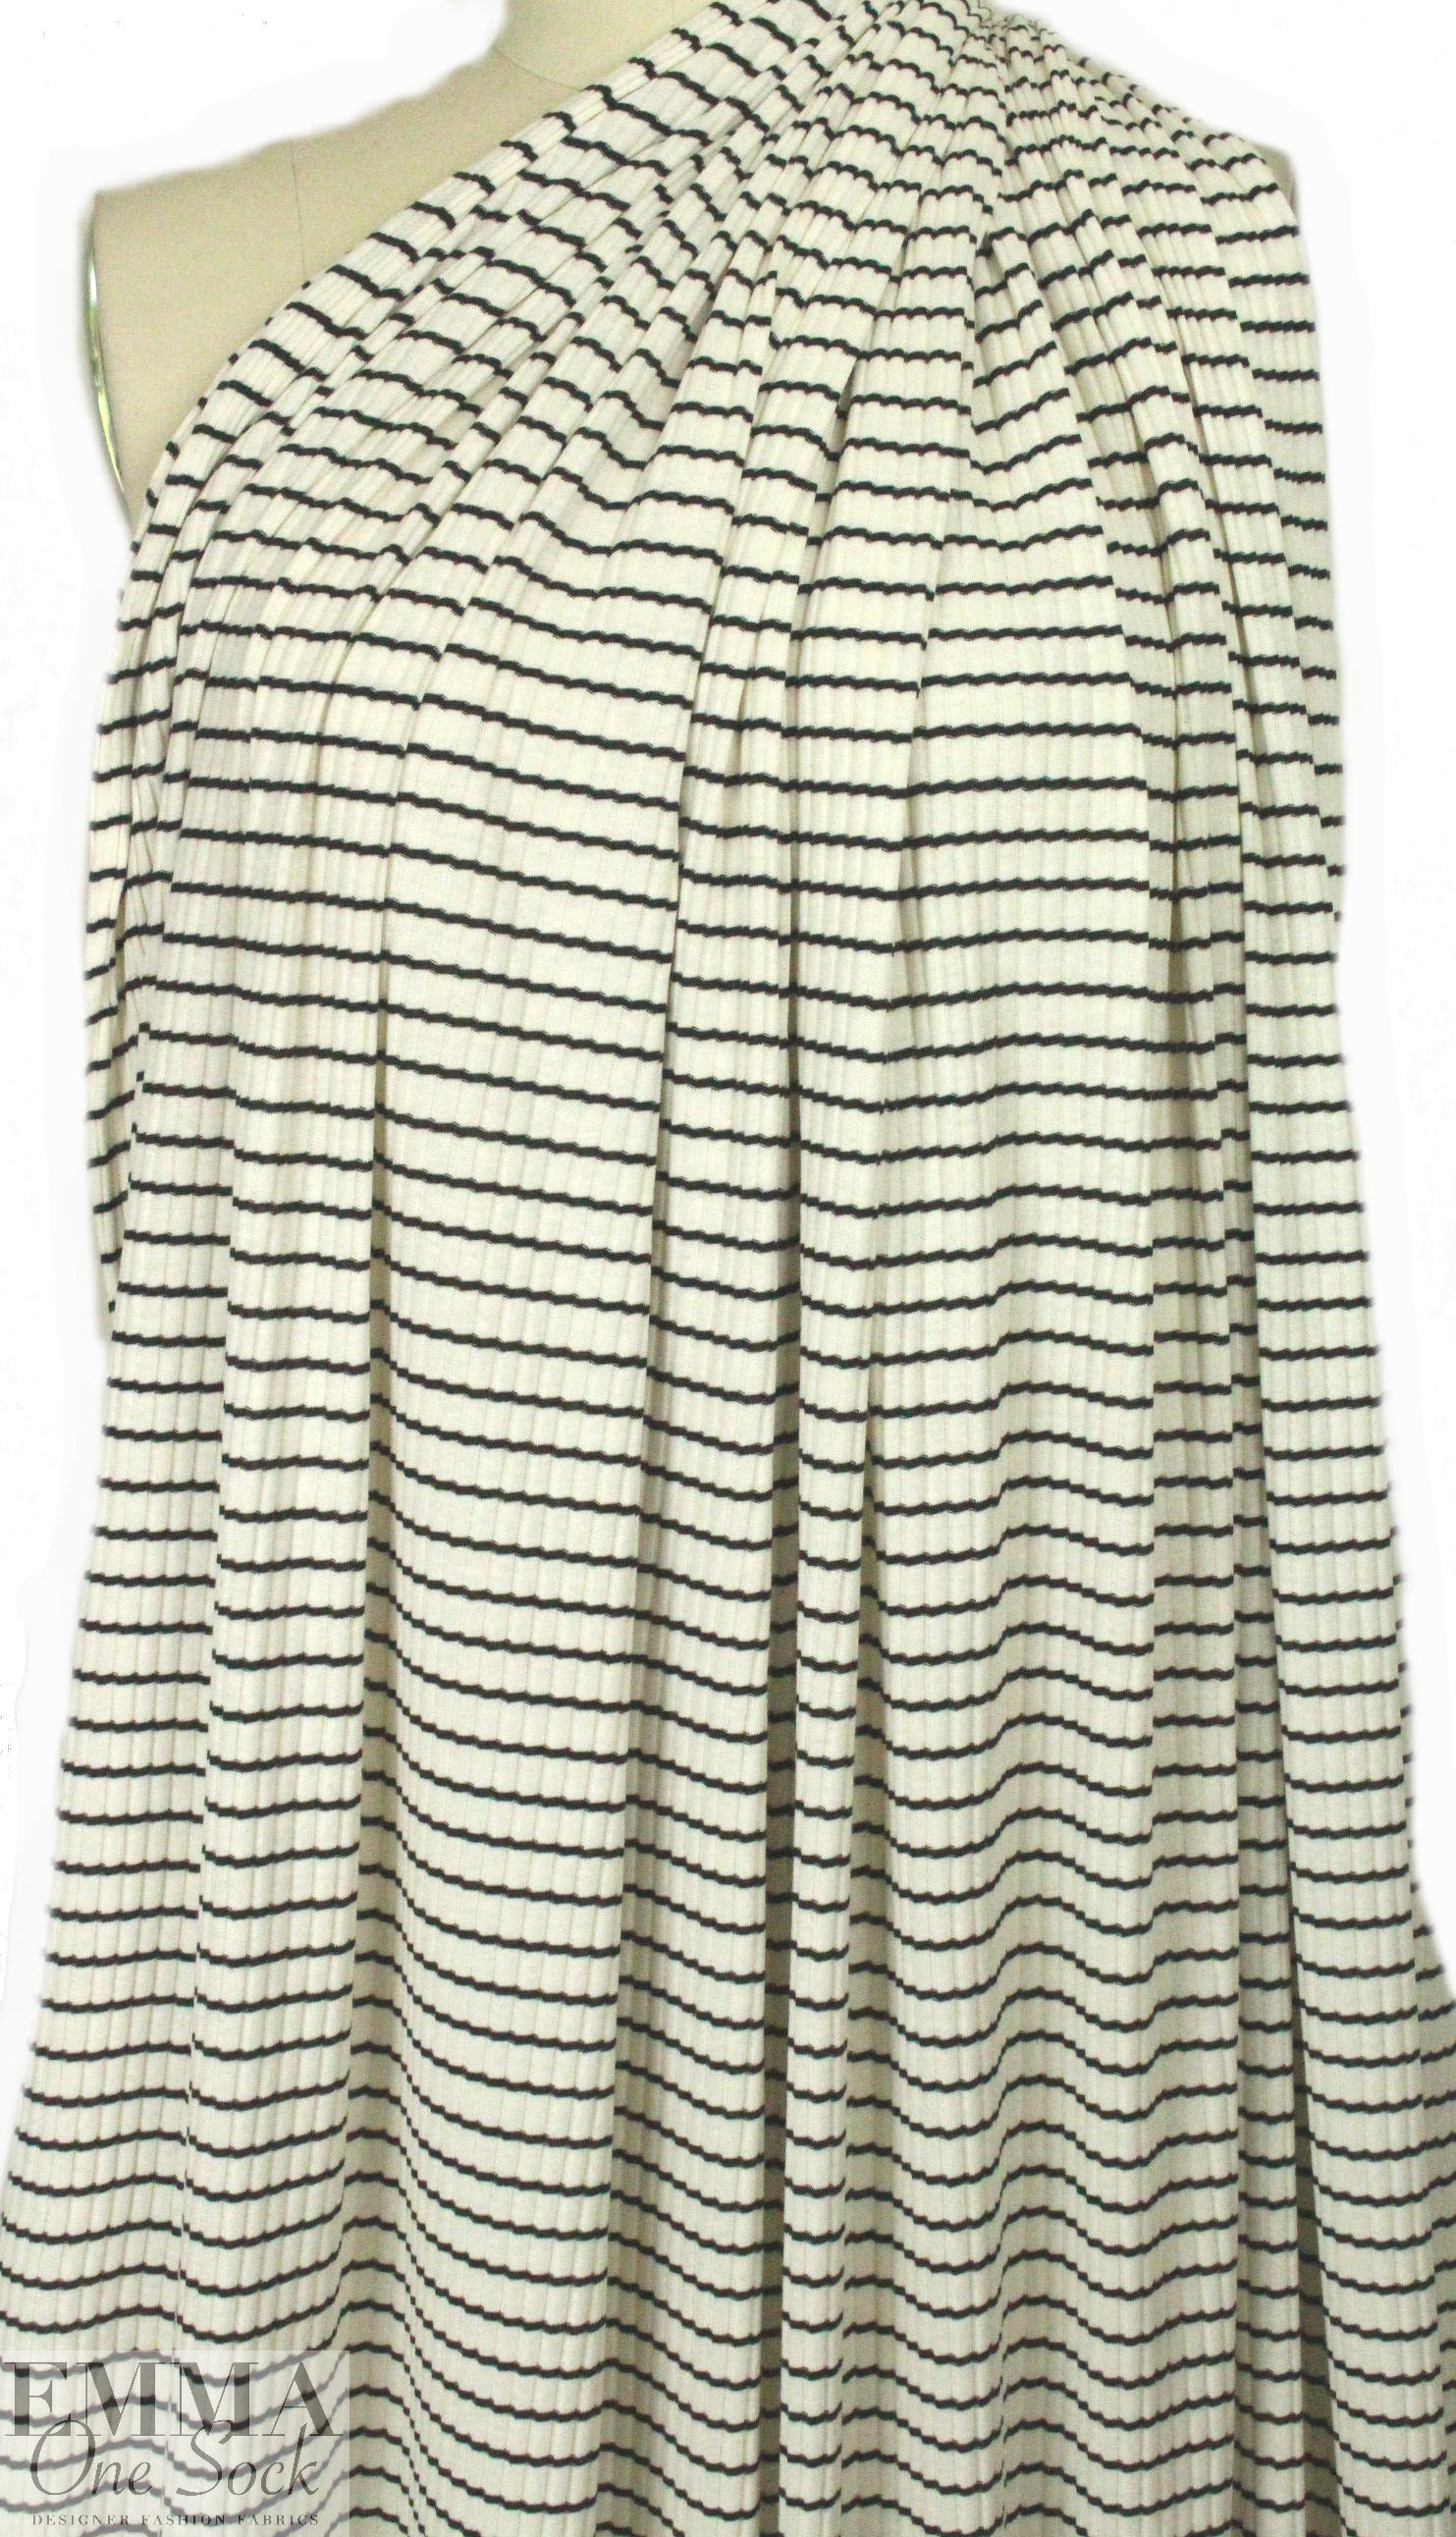 CA designer 6x2 rib stripe cotton knit - black/natural from EmmaOneSock.com